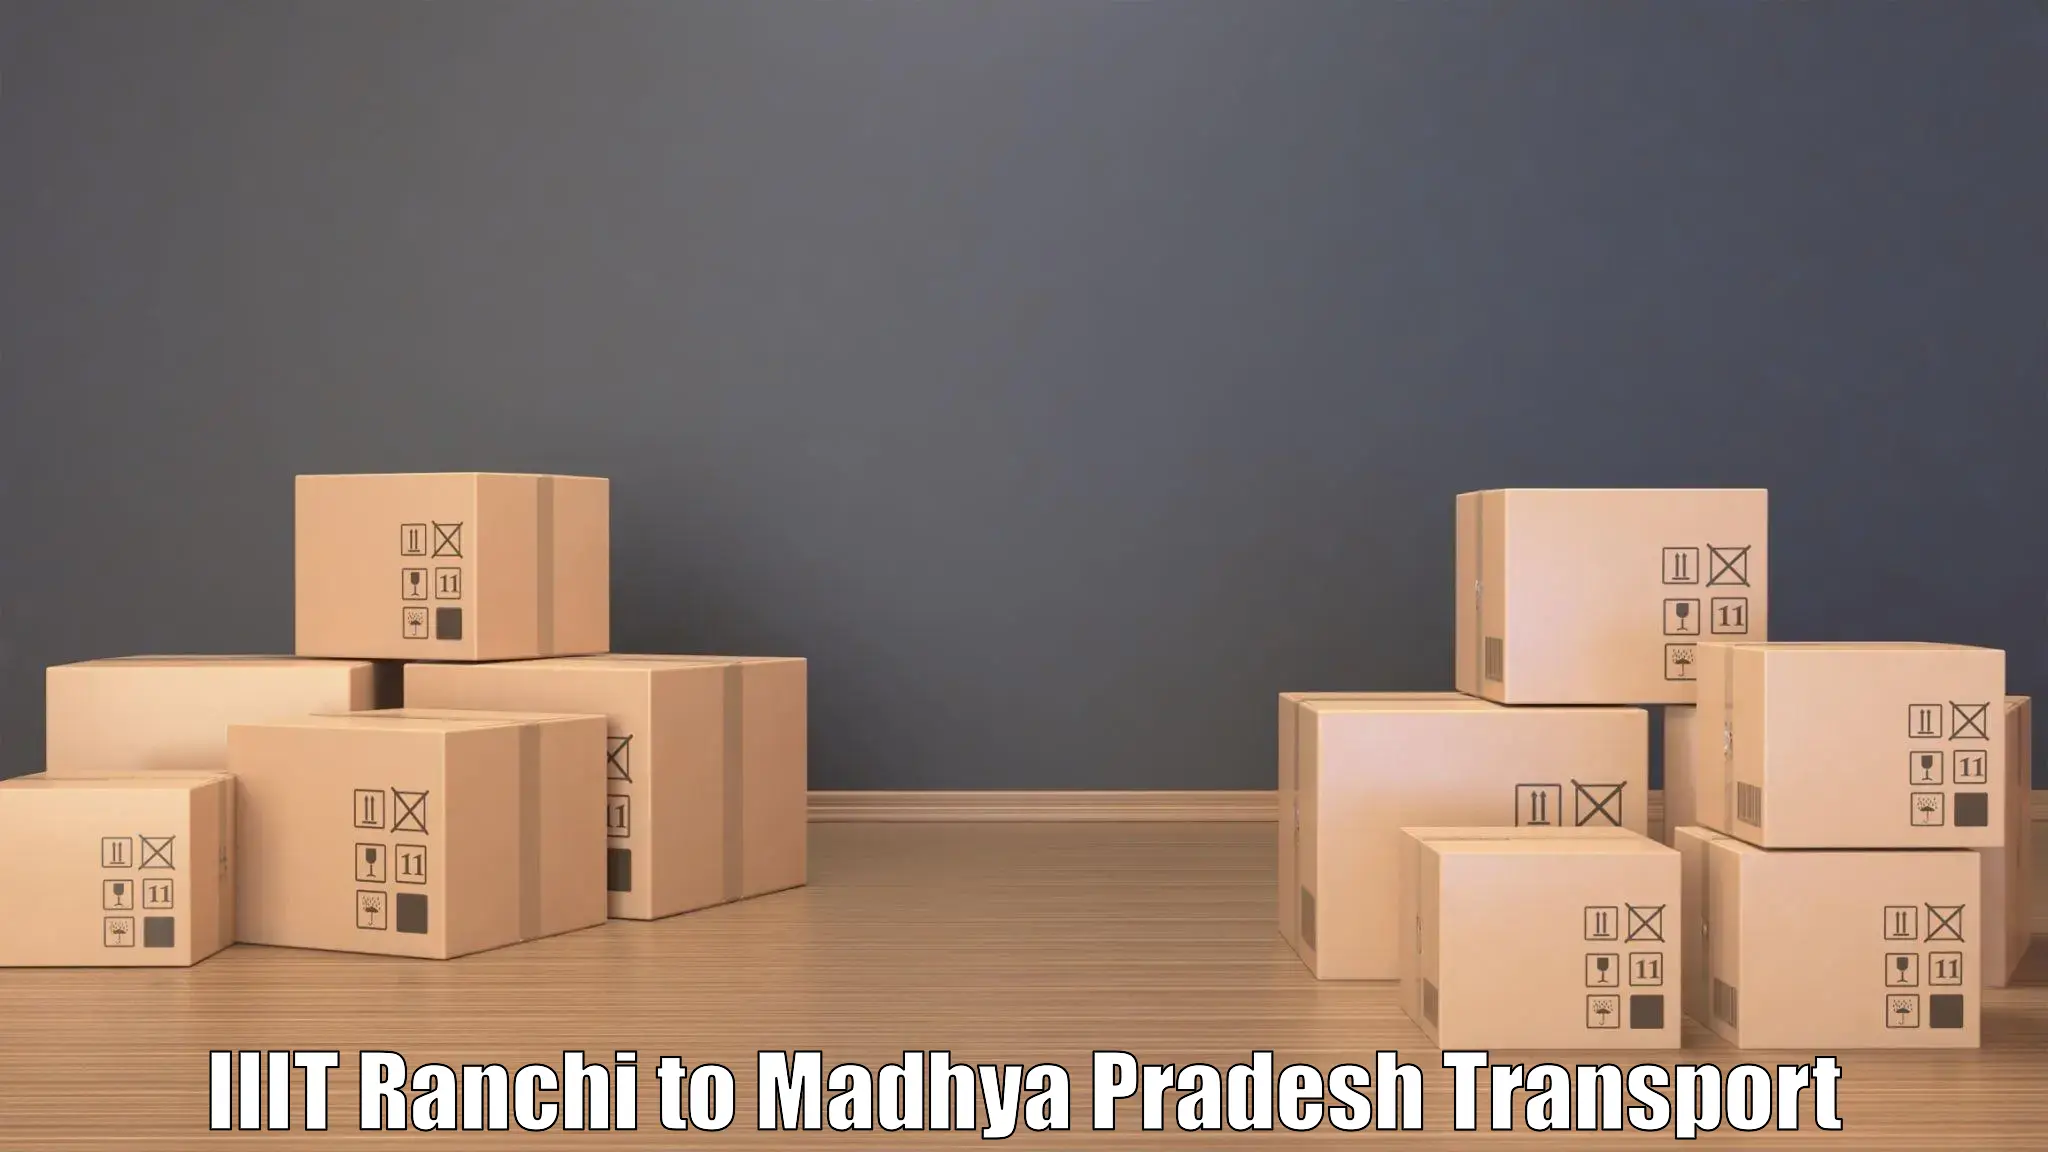 Pick up transport service IIIT Ranchi to Vidisha